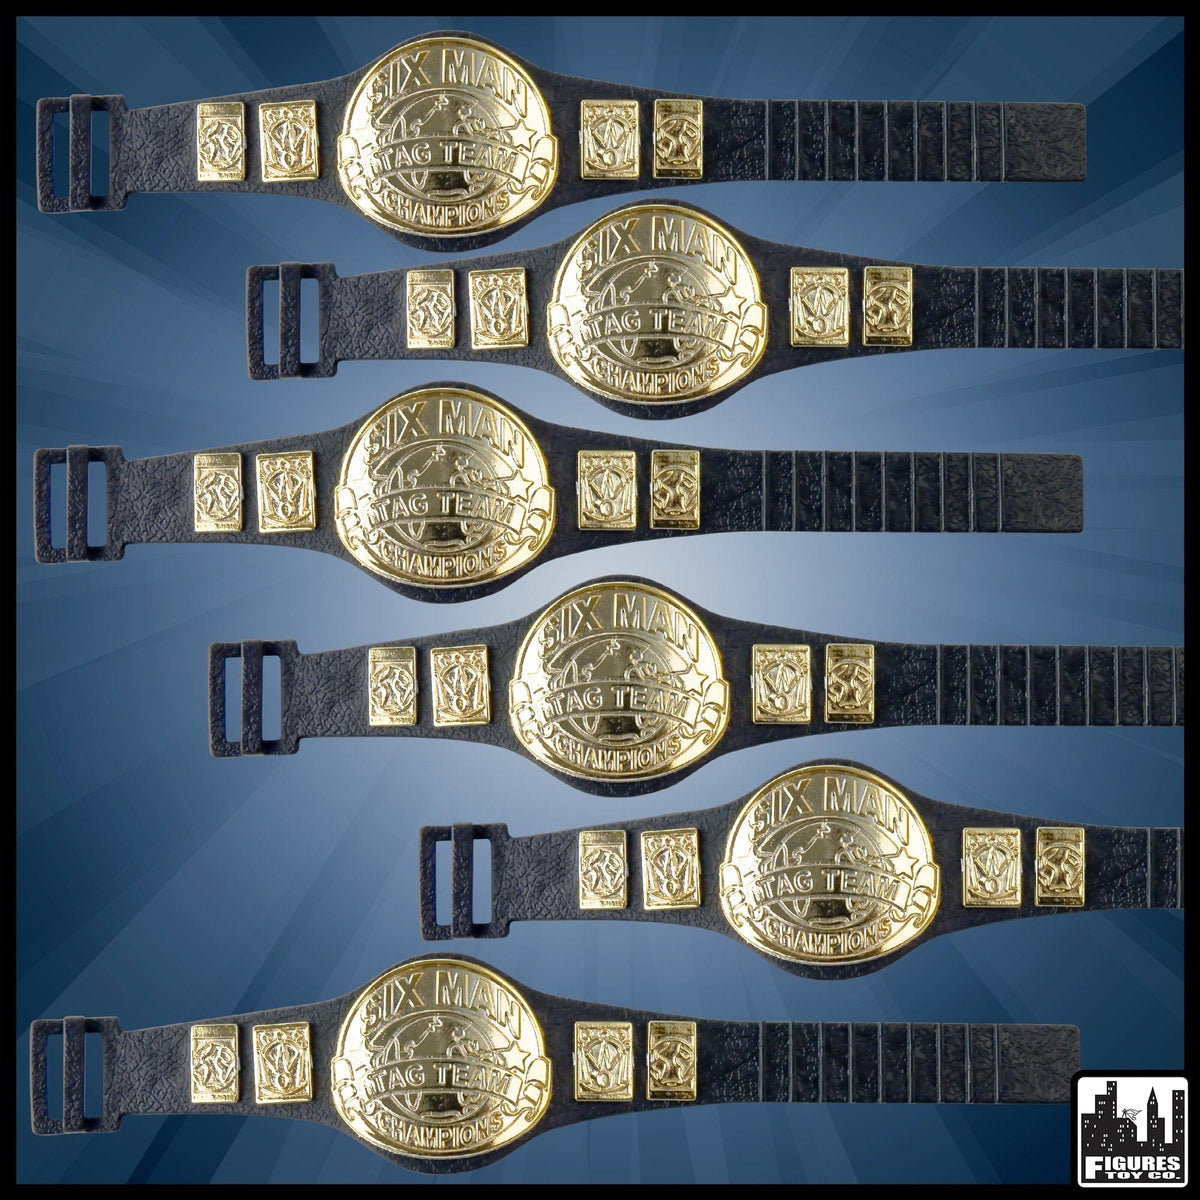 Six Man Tag Championship Belts for WWE Wrestling Action Figures (Set of 6)